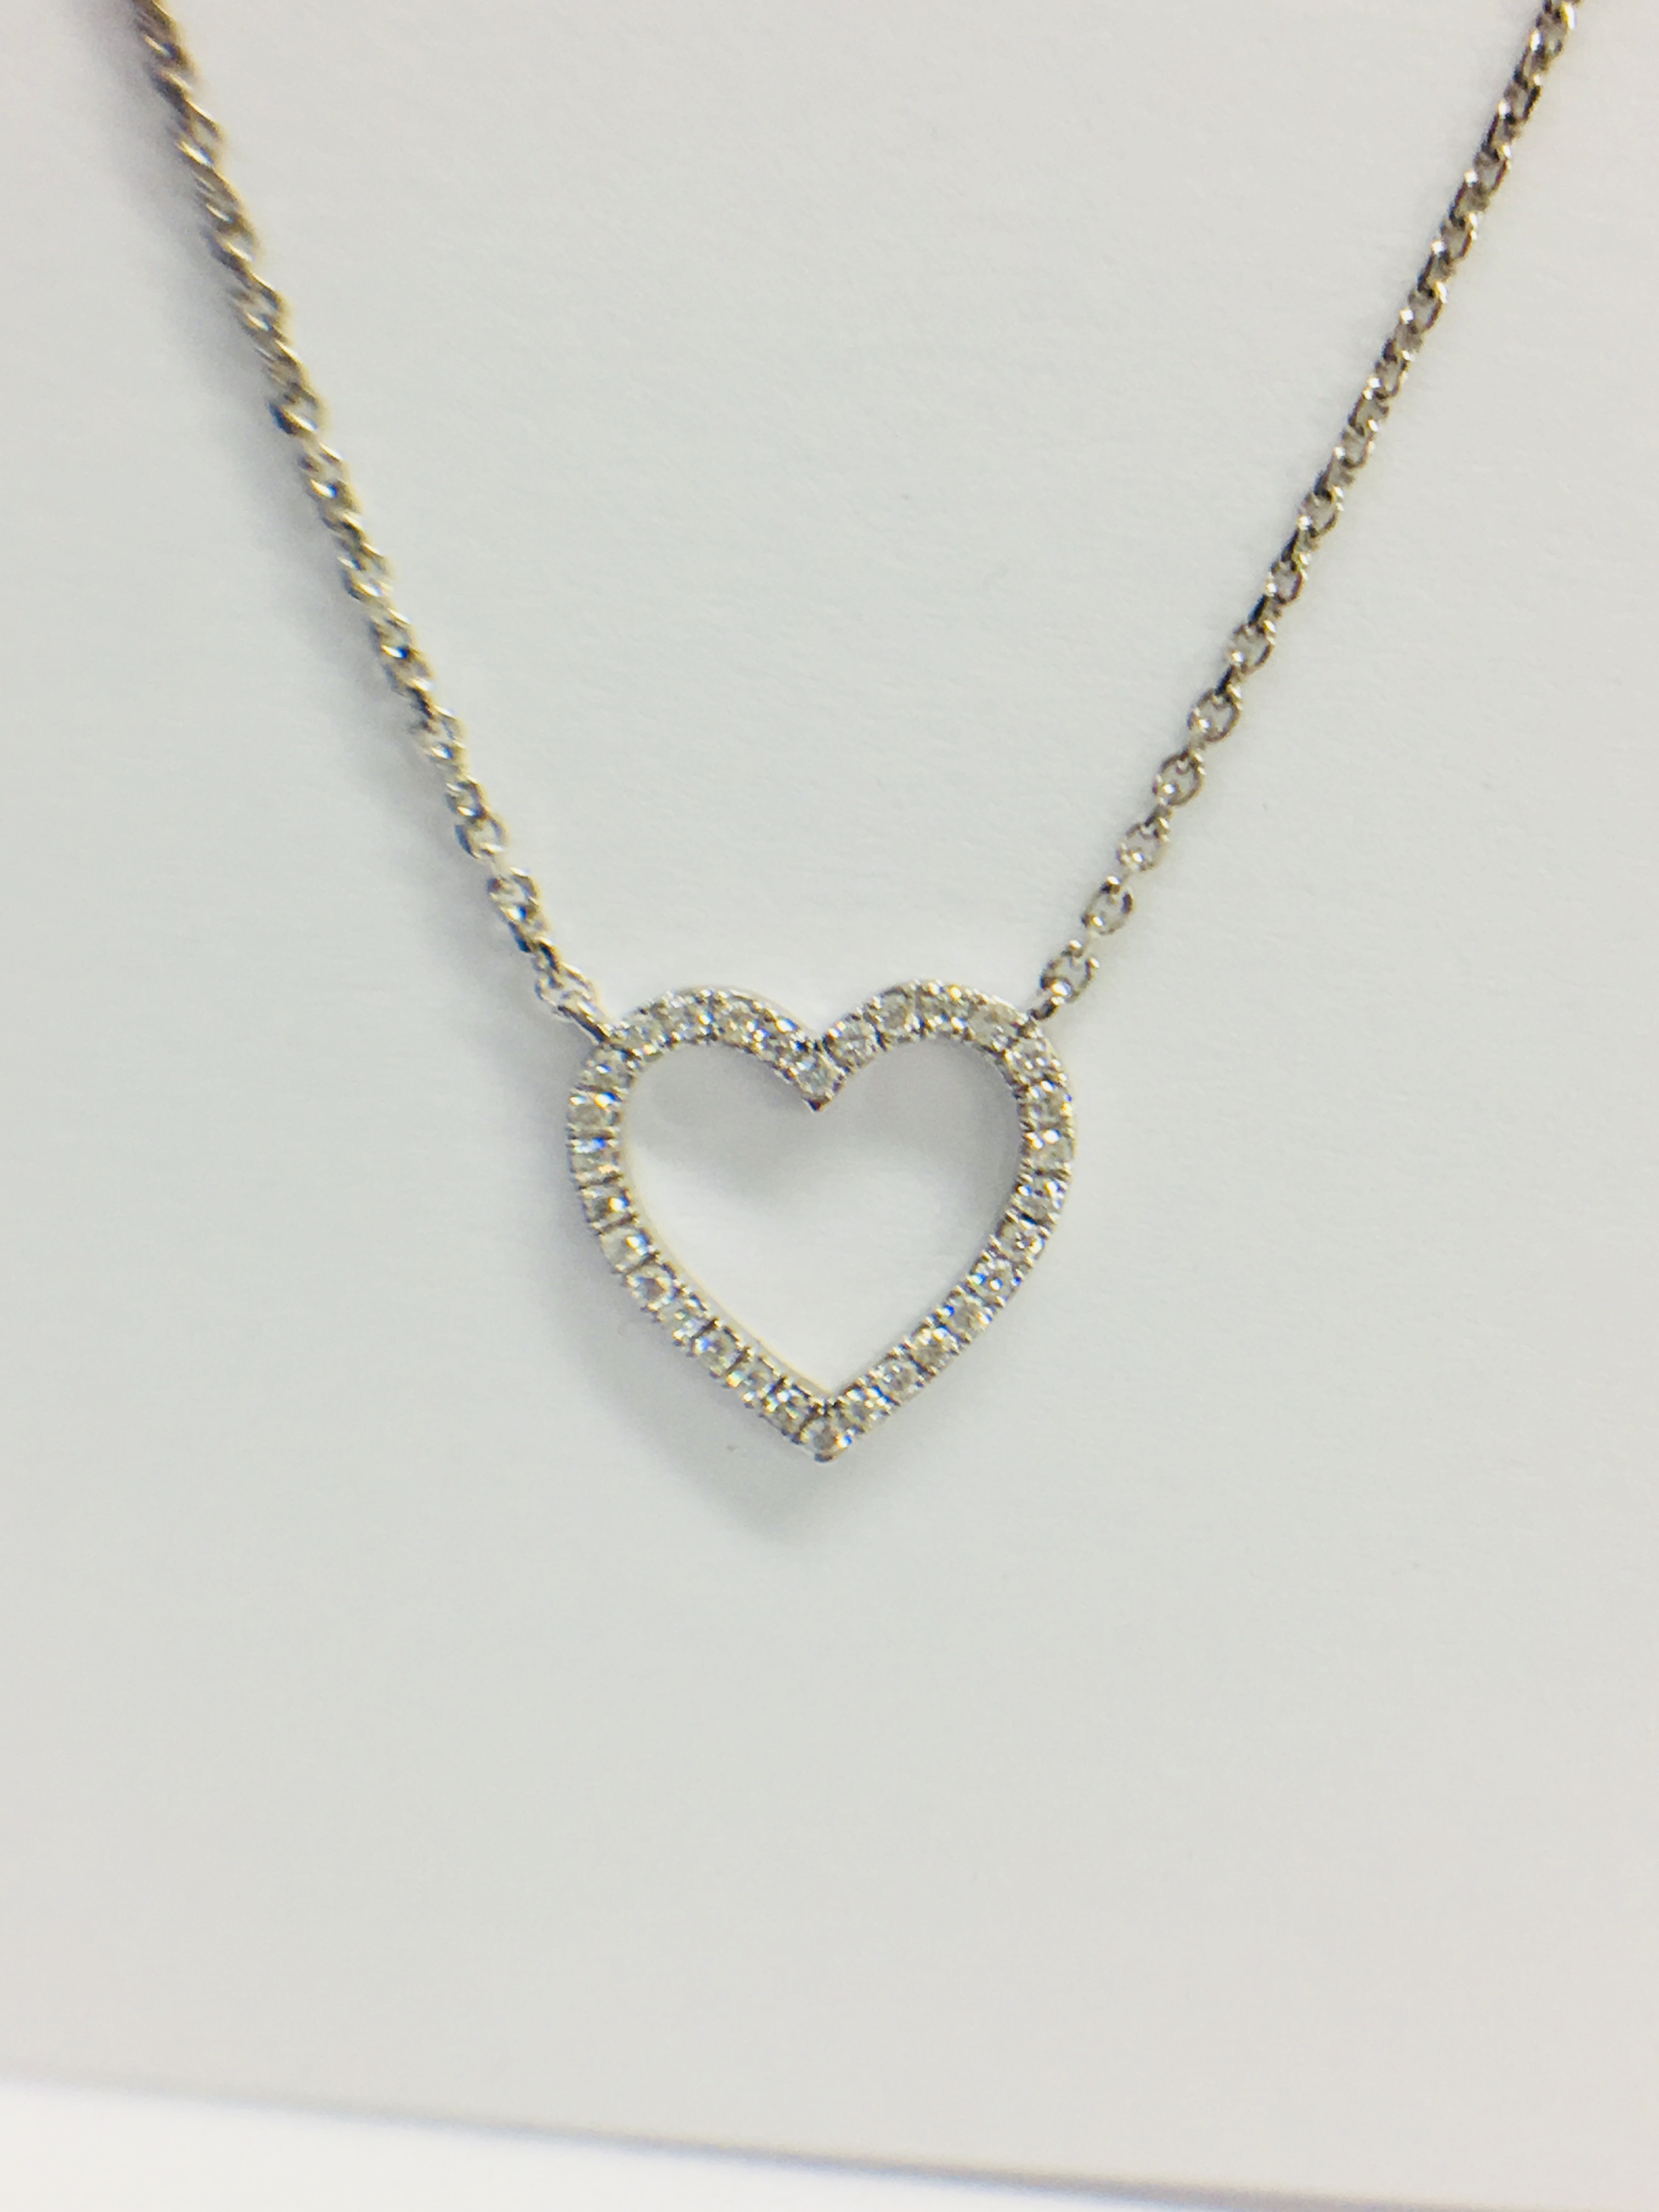 DIAMOND HEART NECKLACE - Image 2 of 3